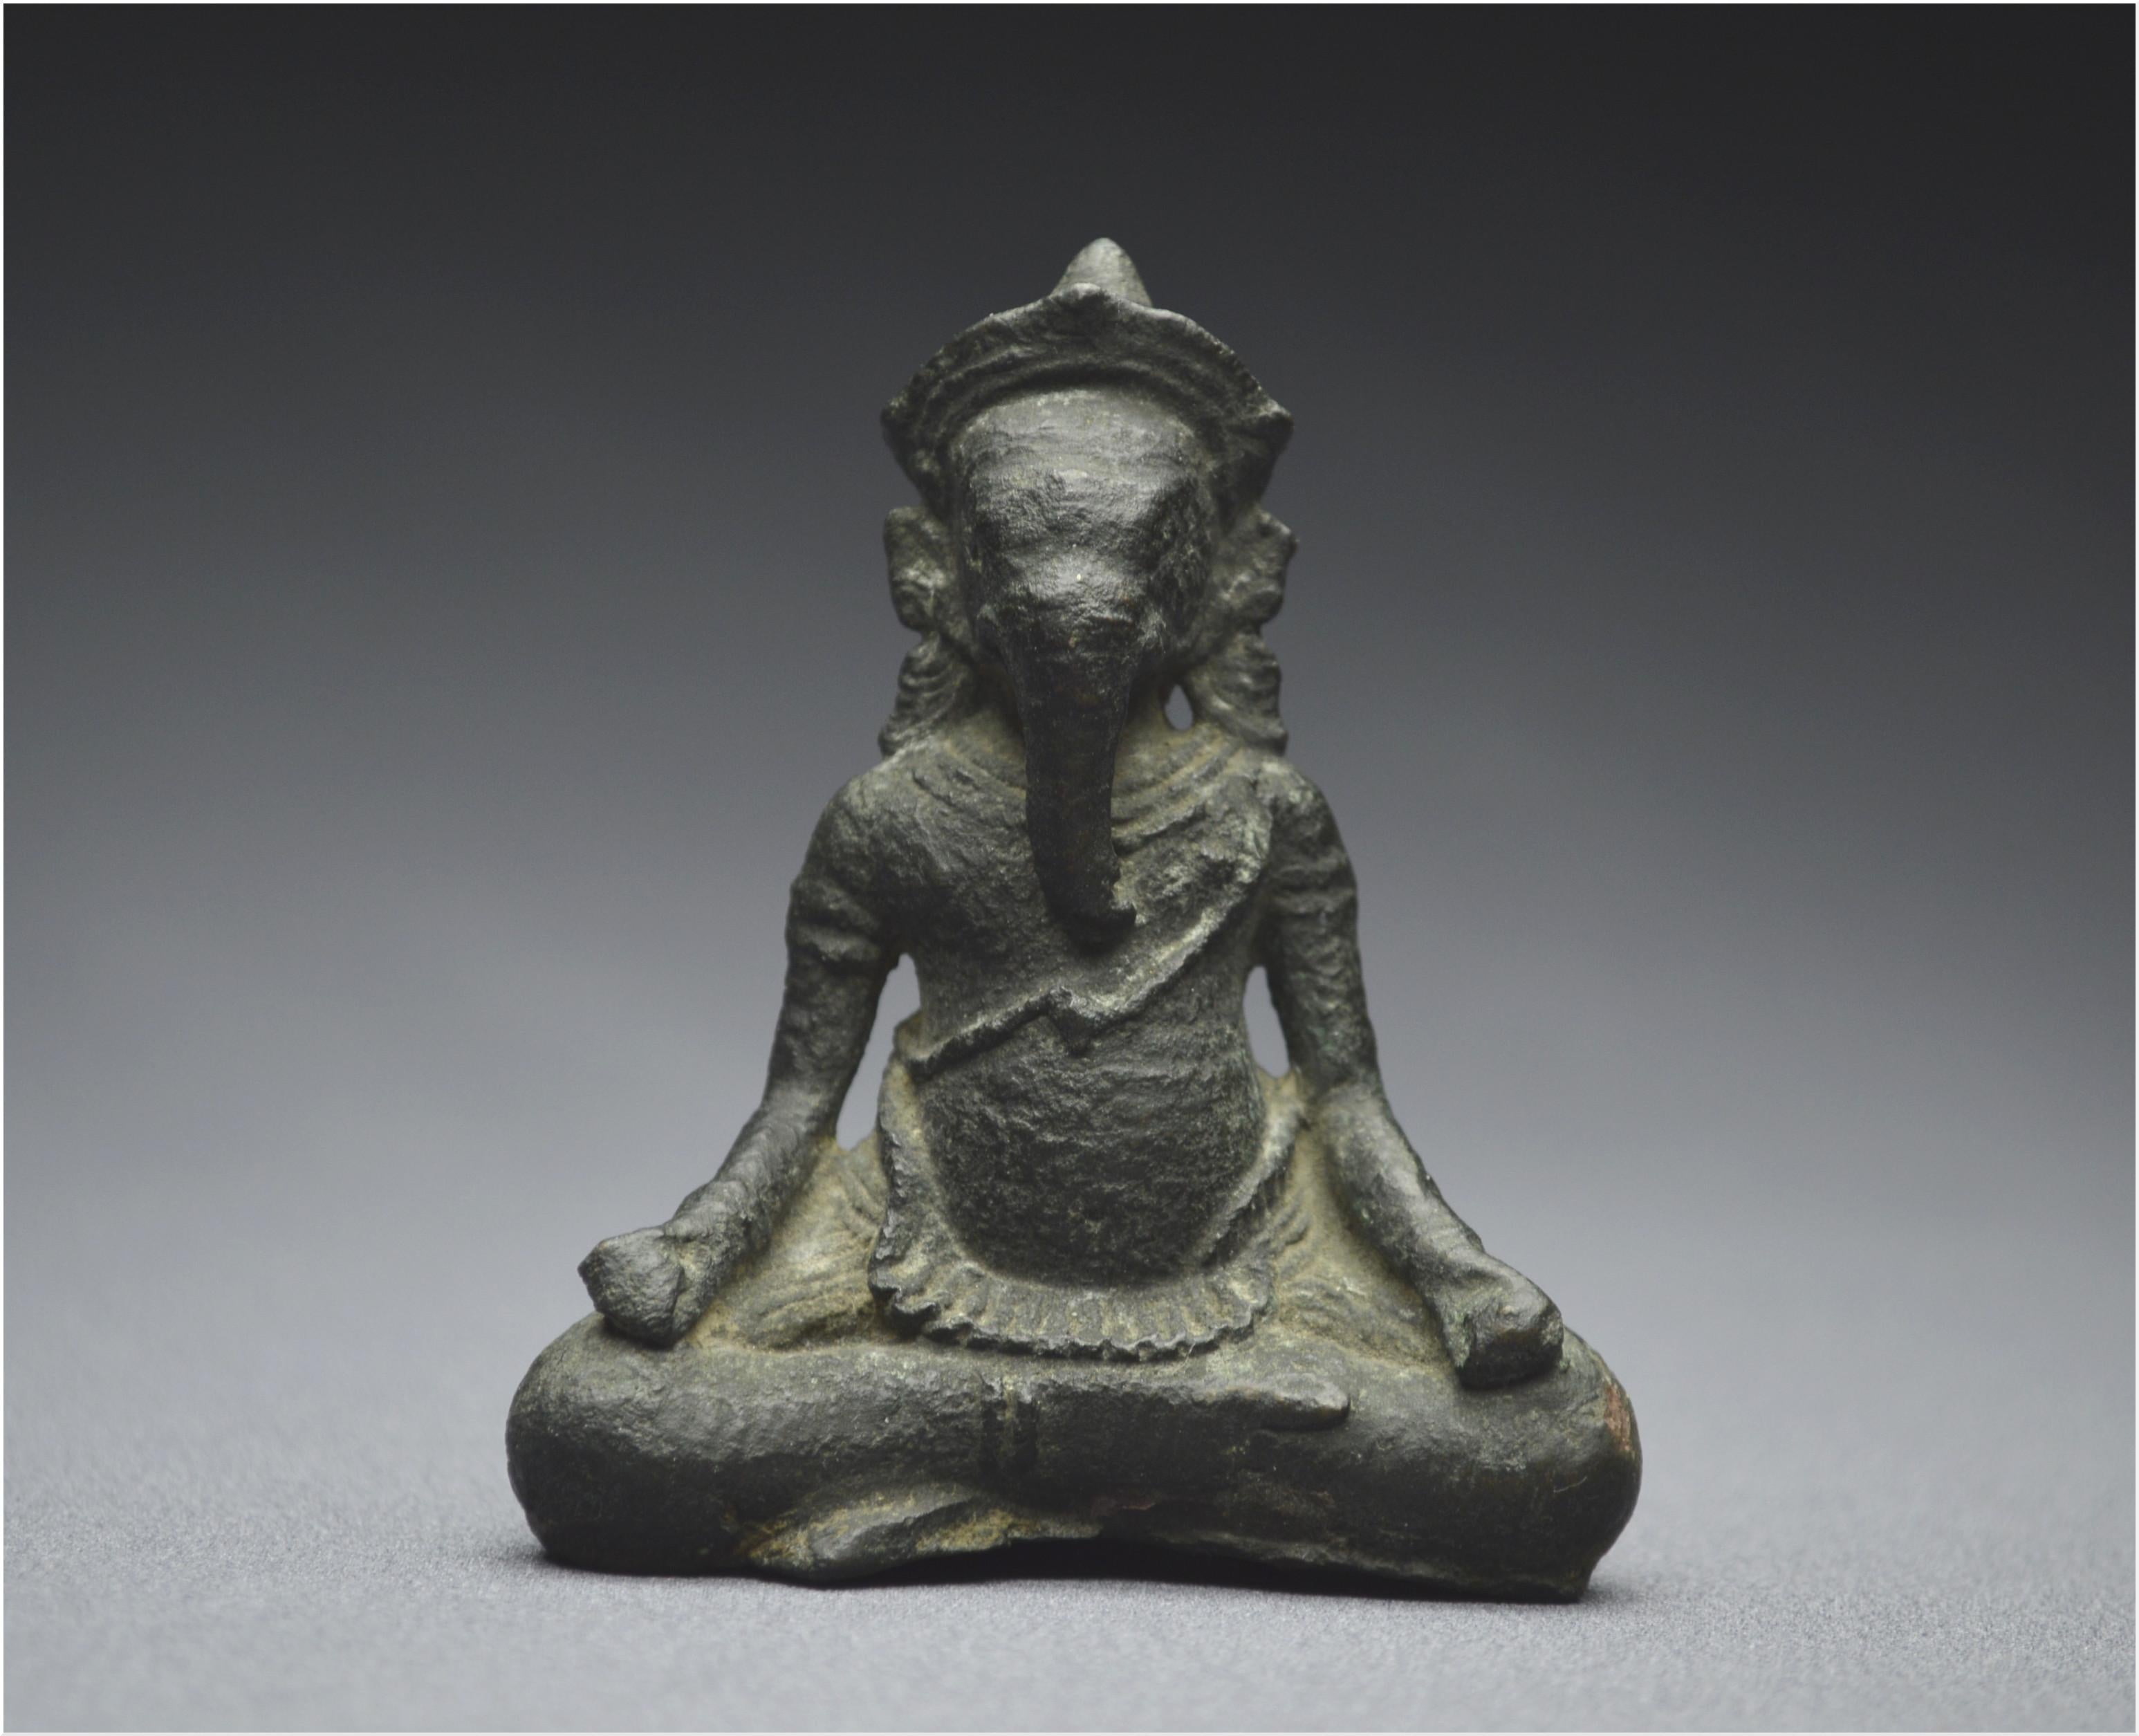 Cambodian Cambodia, 11th Century, Angkor Vat period, Little bronze statuette of Ganesha